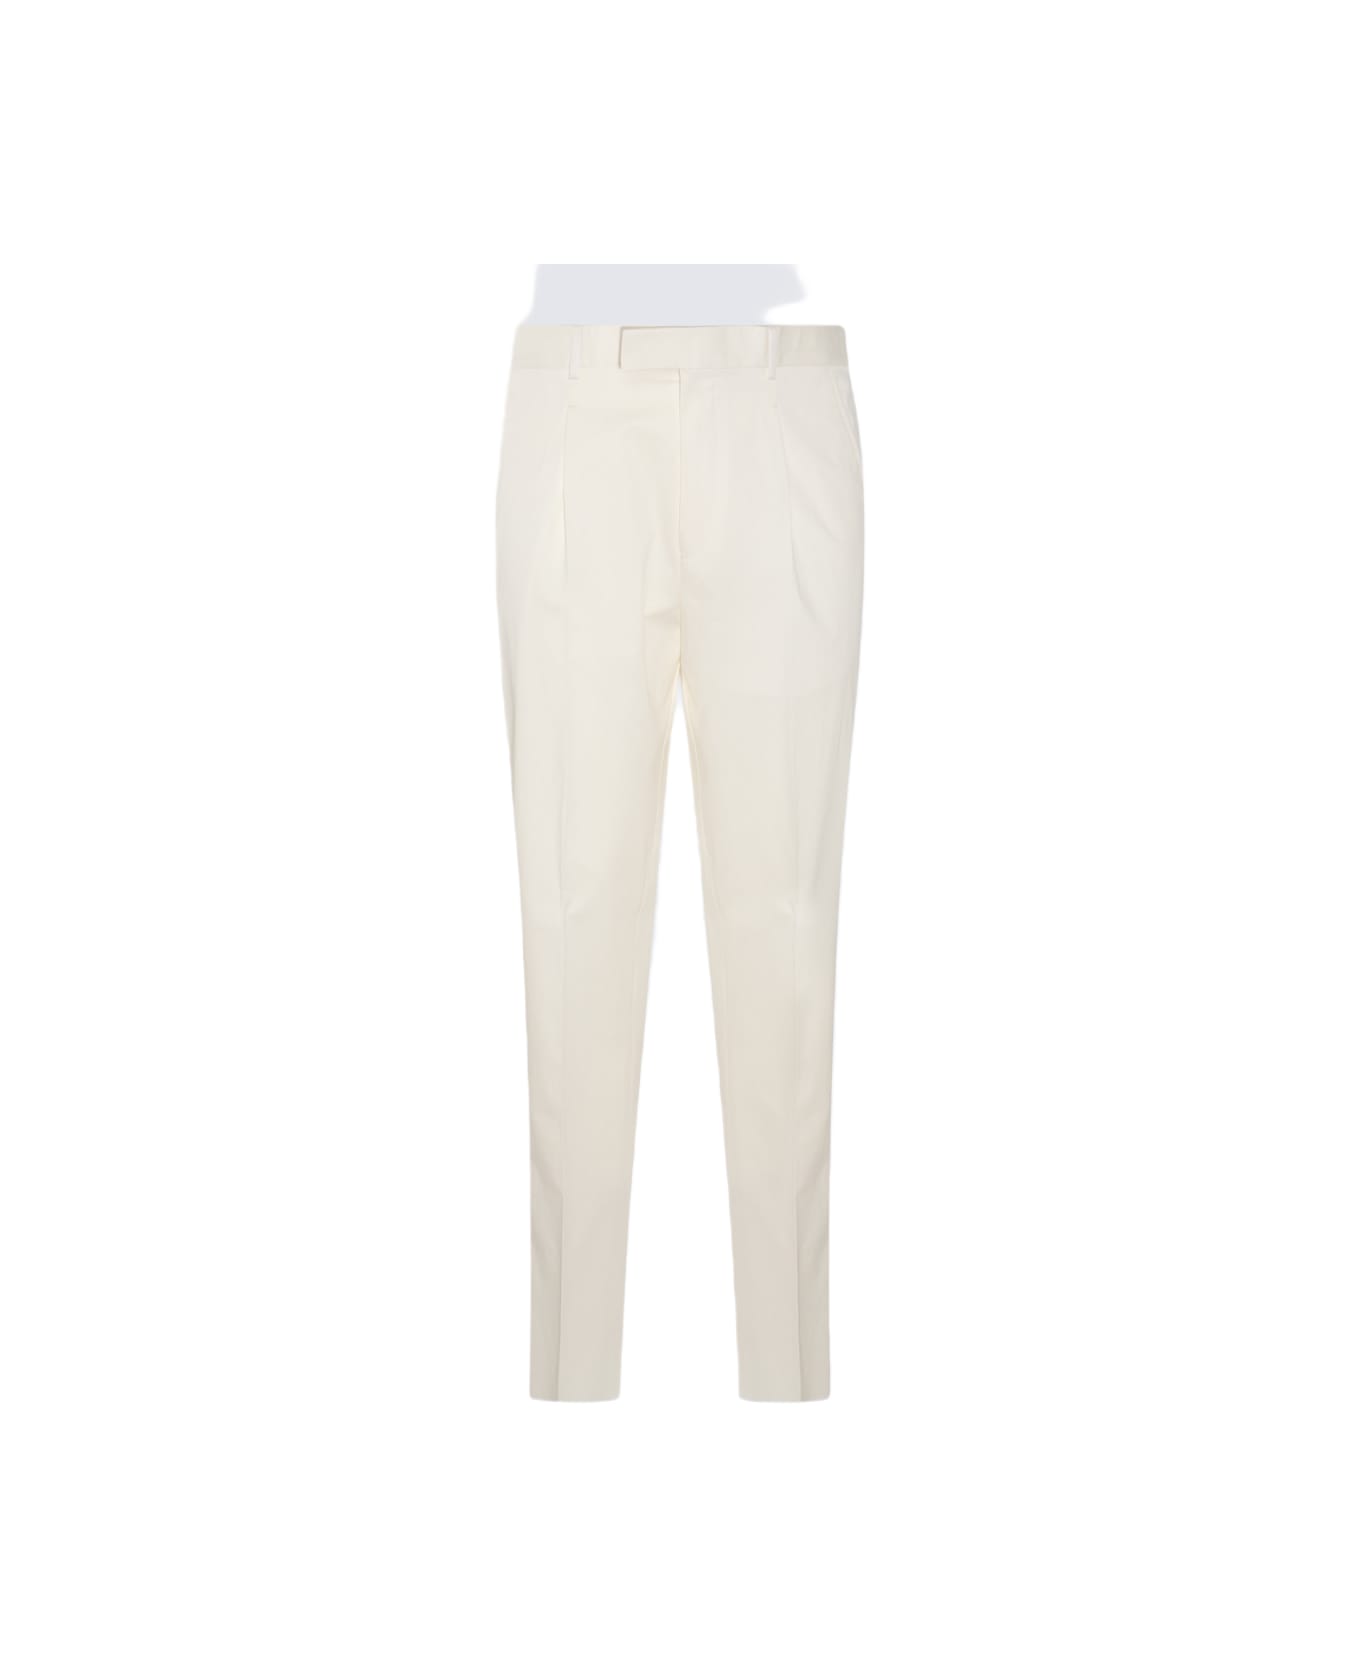 Zegna White Cotton Blend Trousers - White ボトムス